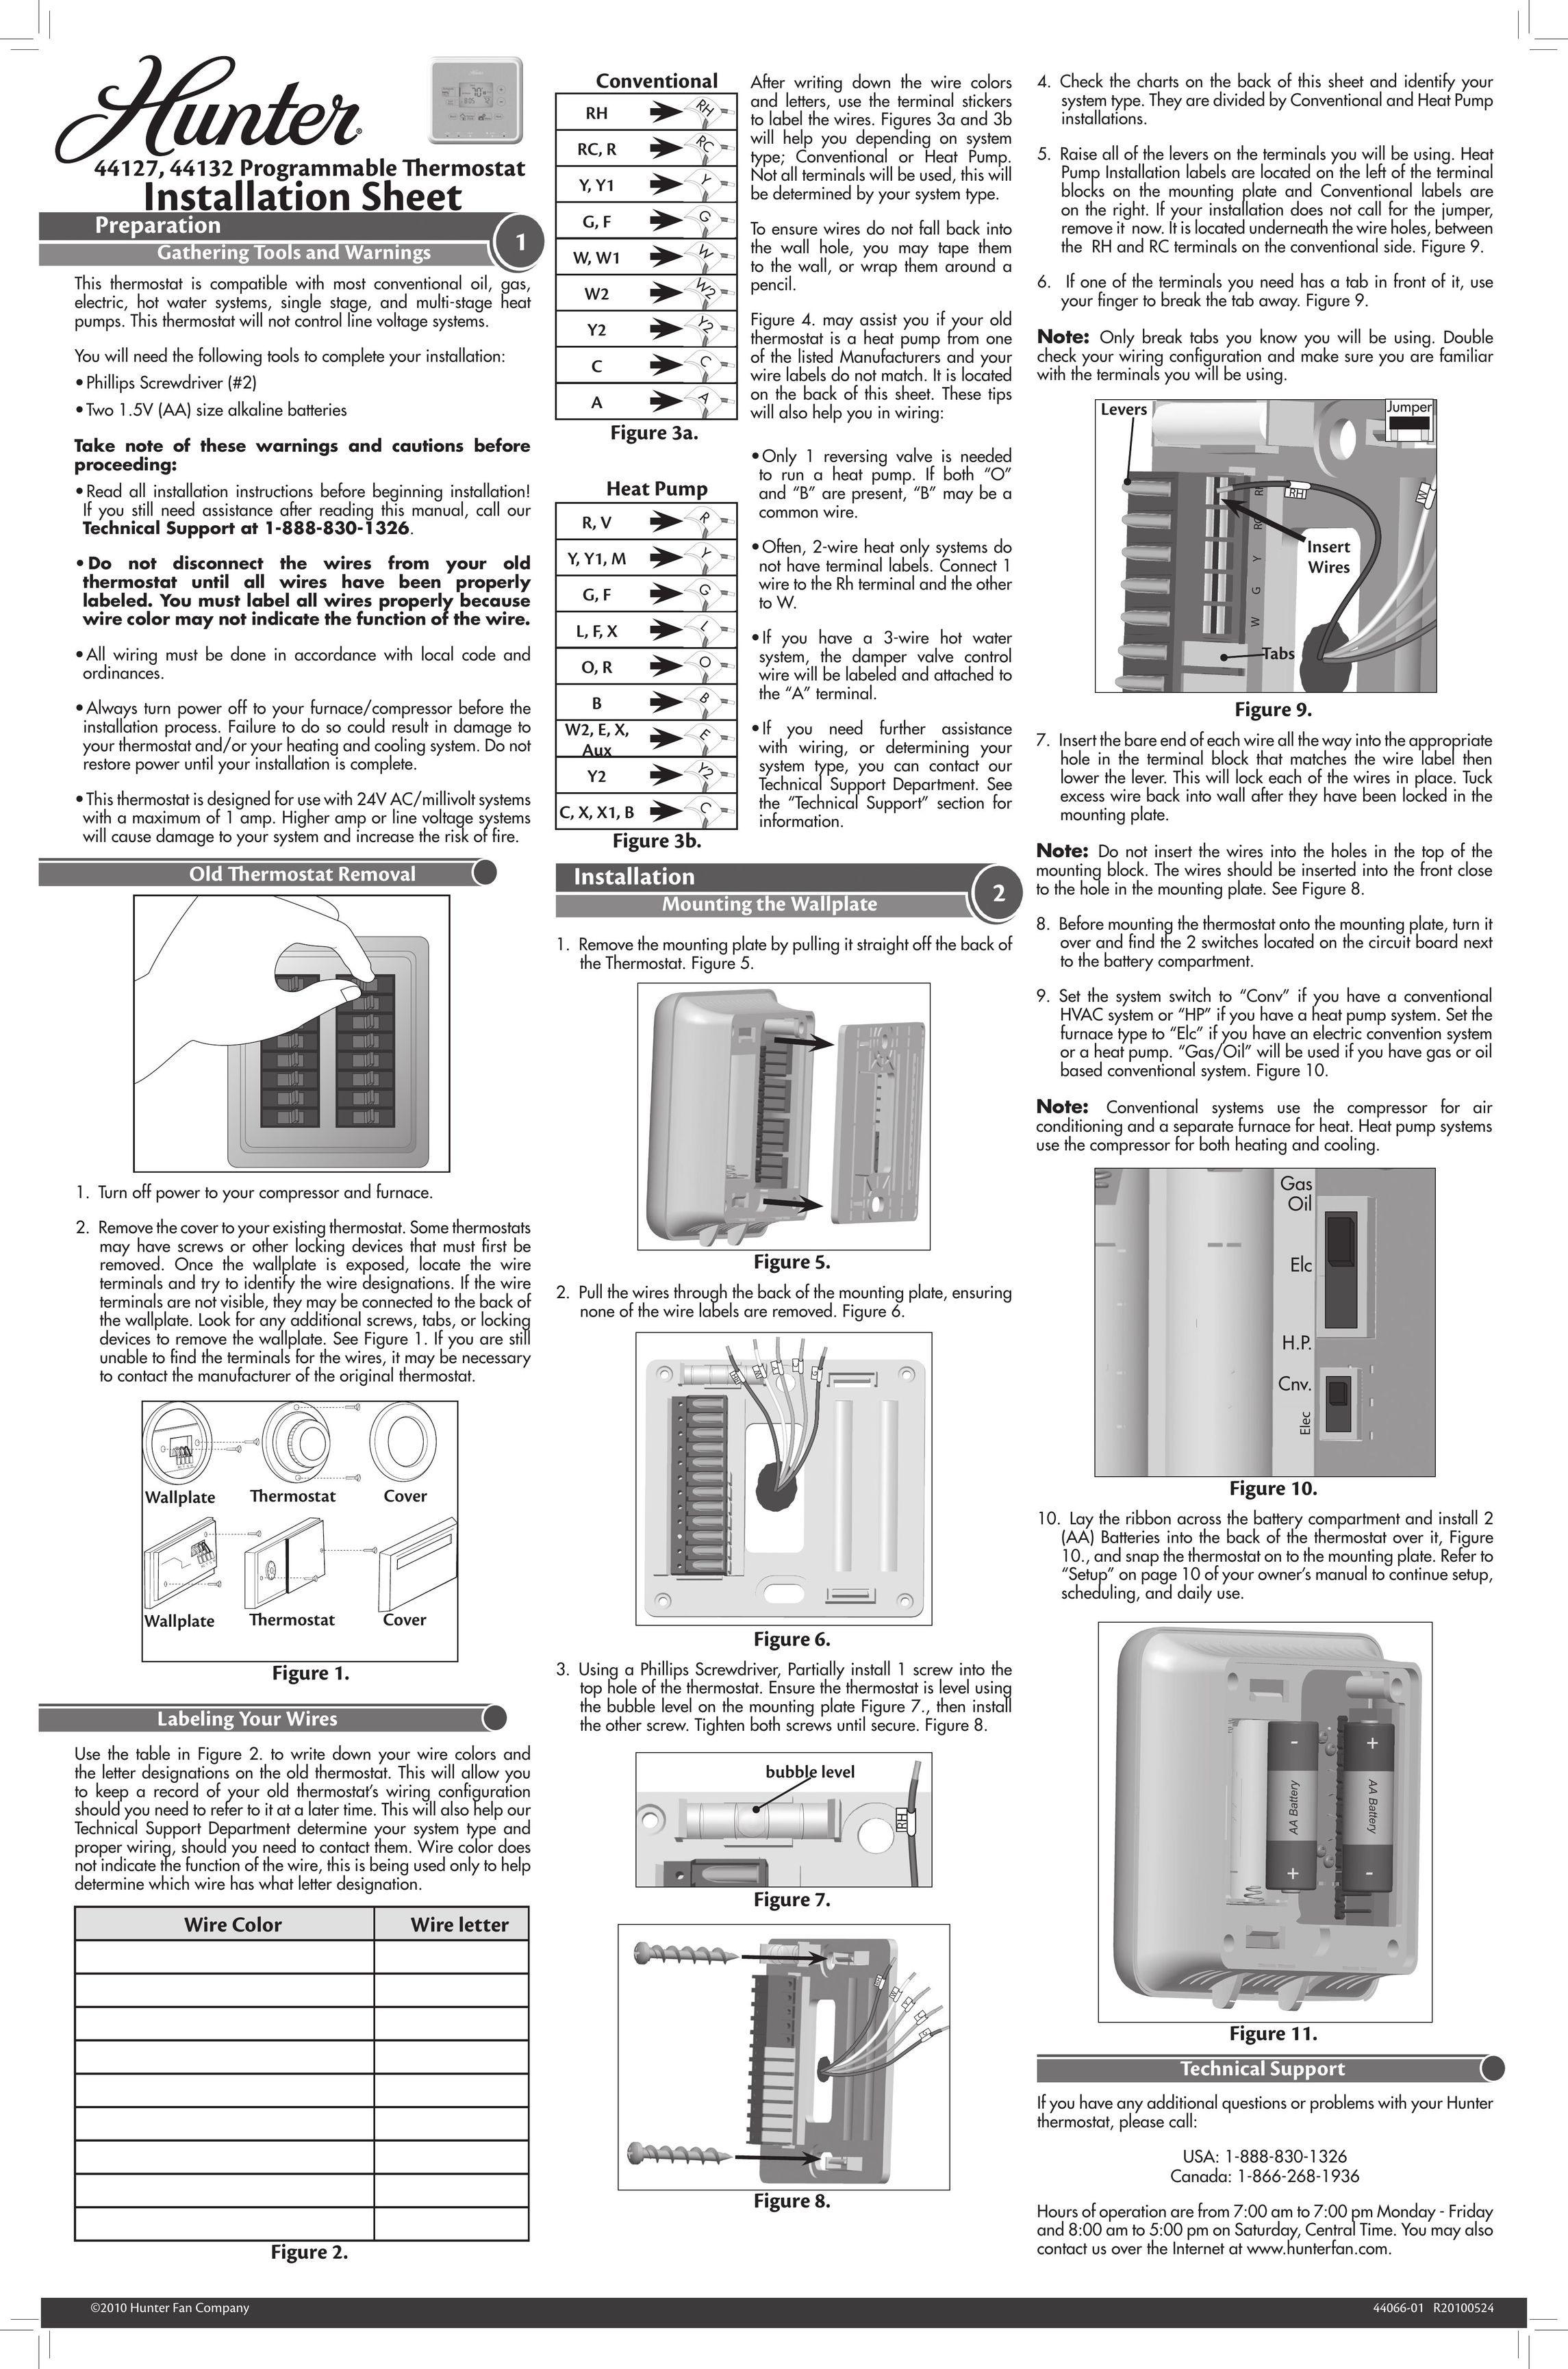 Hunter Fan 44127 Thermostat User Manual